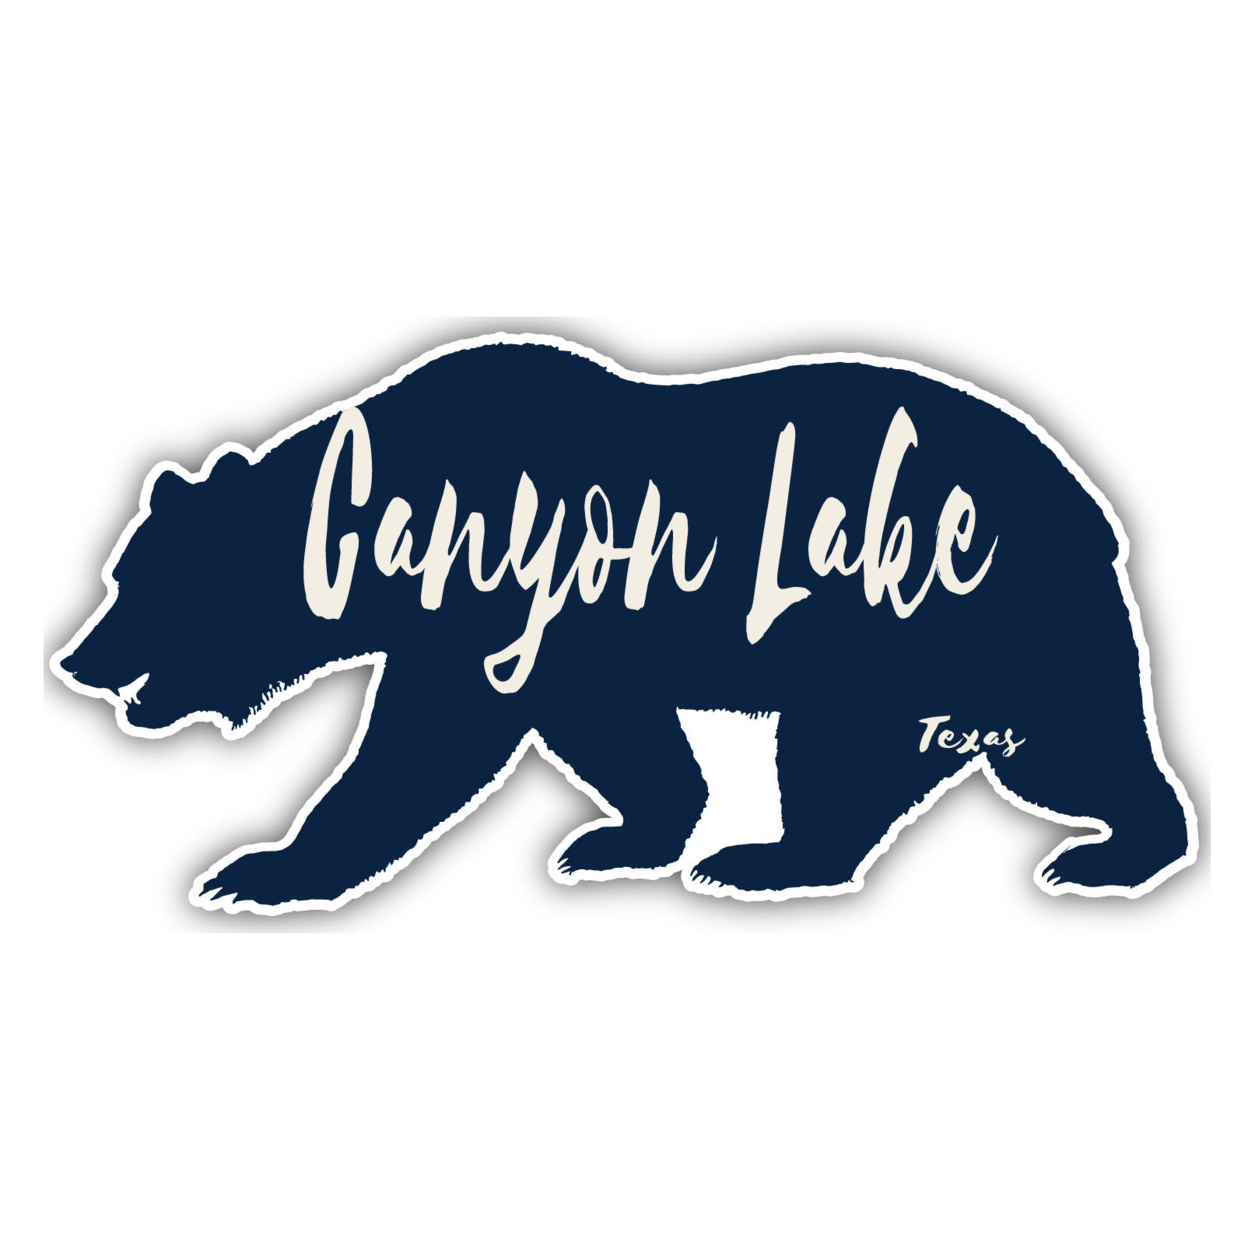 Canyon Lake Texas Souvenir Decorative Stickers (Choose Theme And Size) - Single Unit, 8-Inch, Bear